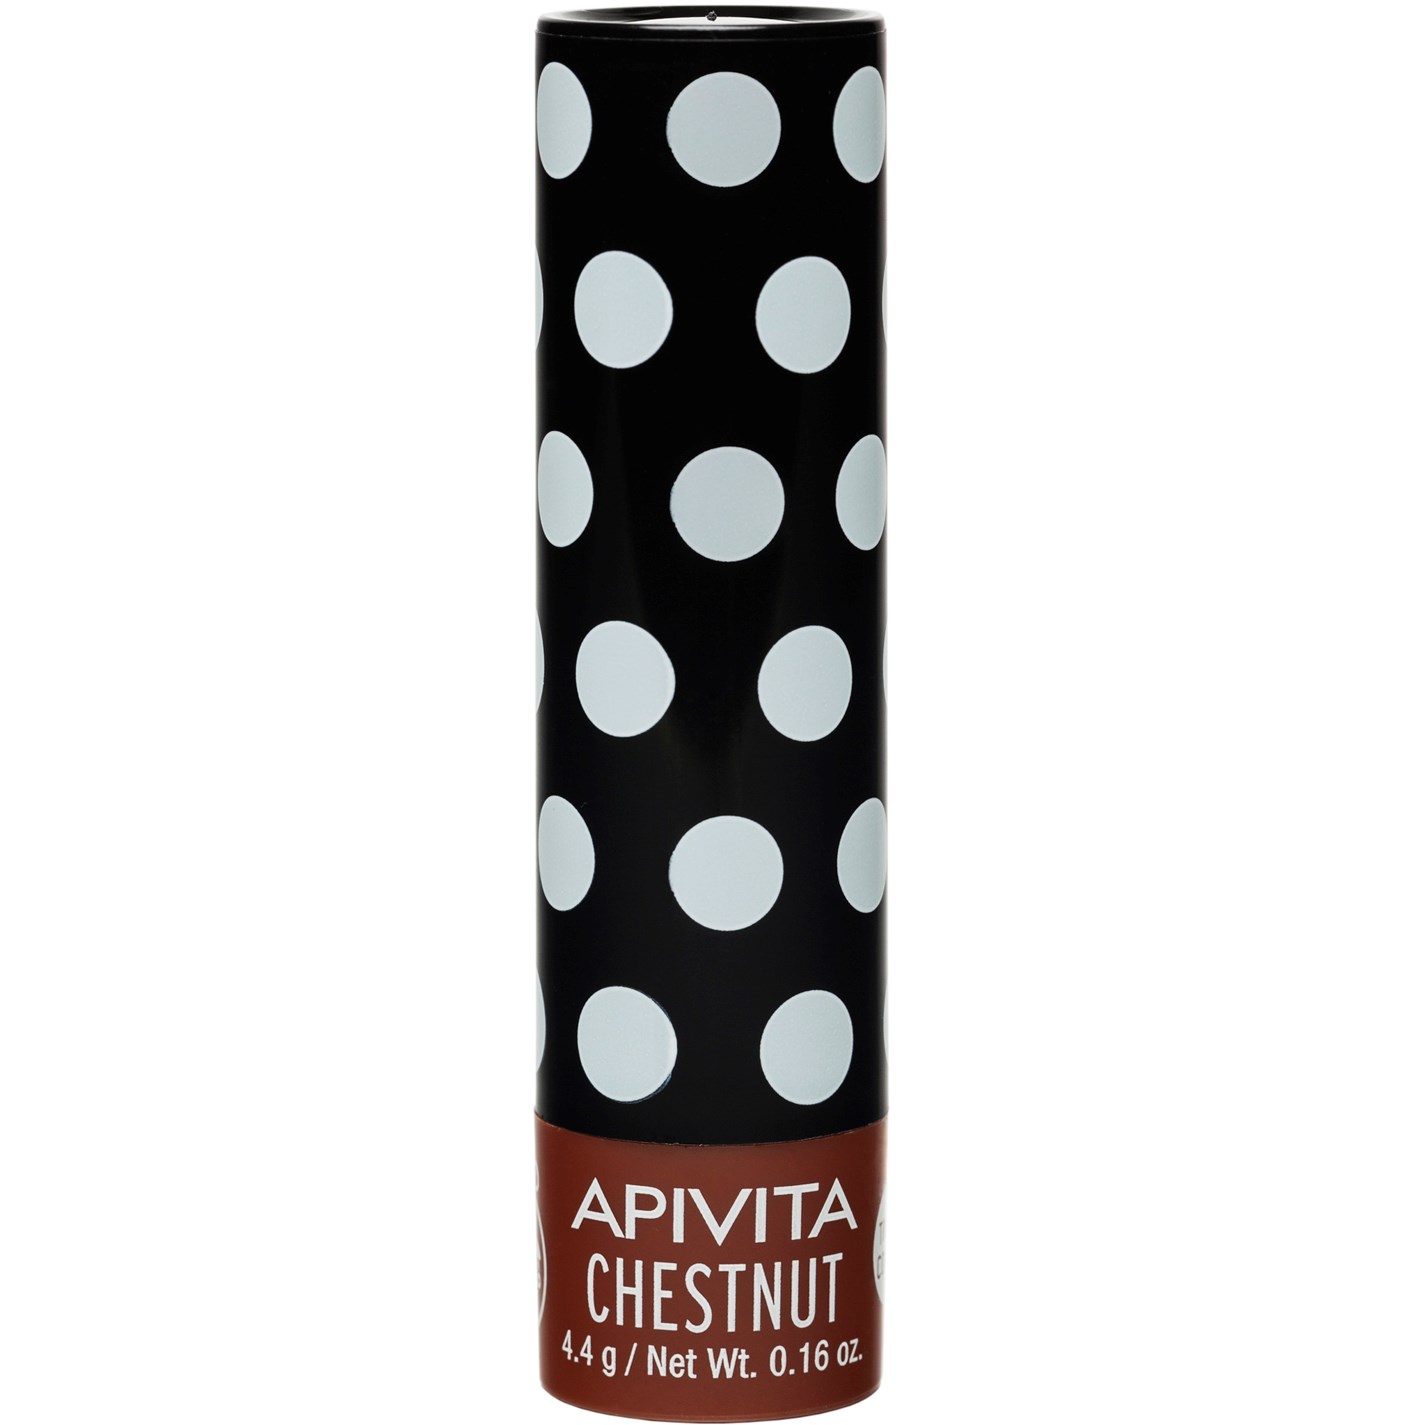 APIVITA Lipcare Chestnut